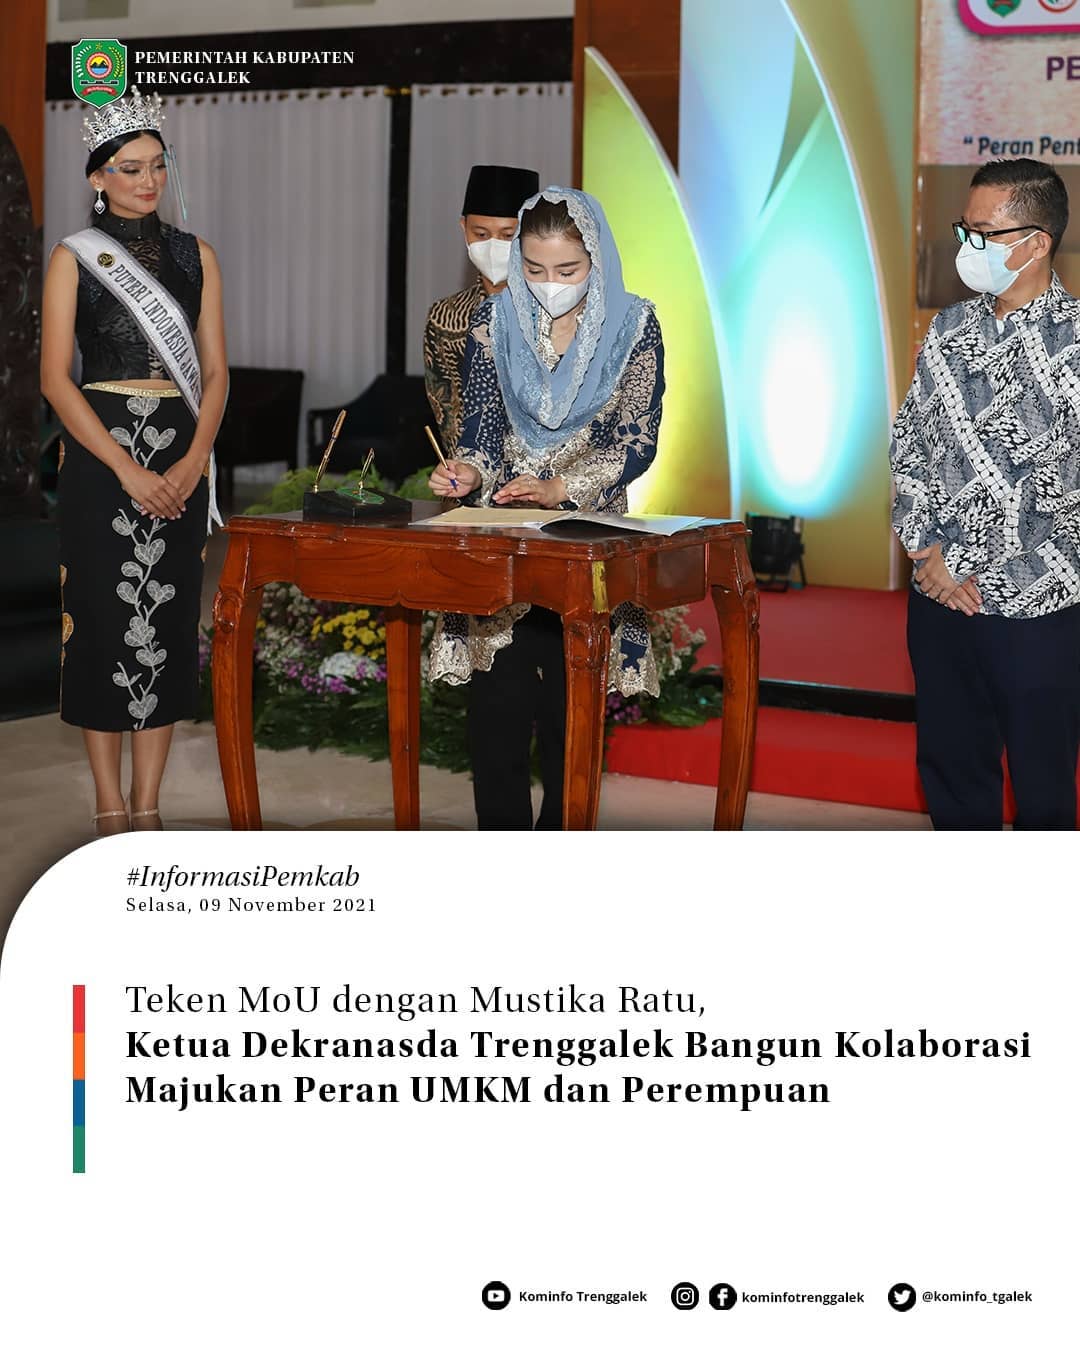 Teken MoU dengan Mustika Ratu, Ketua Dekranasda Trenggalek Bangun Kolaborasi Majukan Peran UMKM dan Perempuan